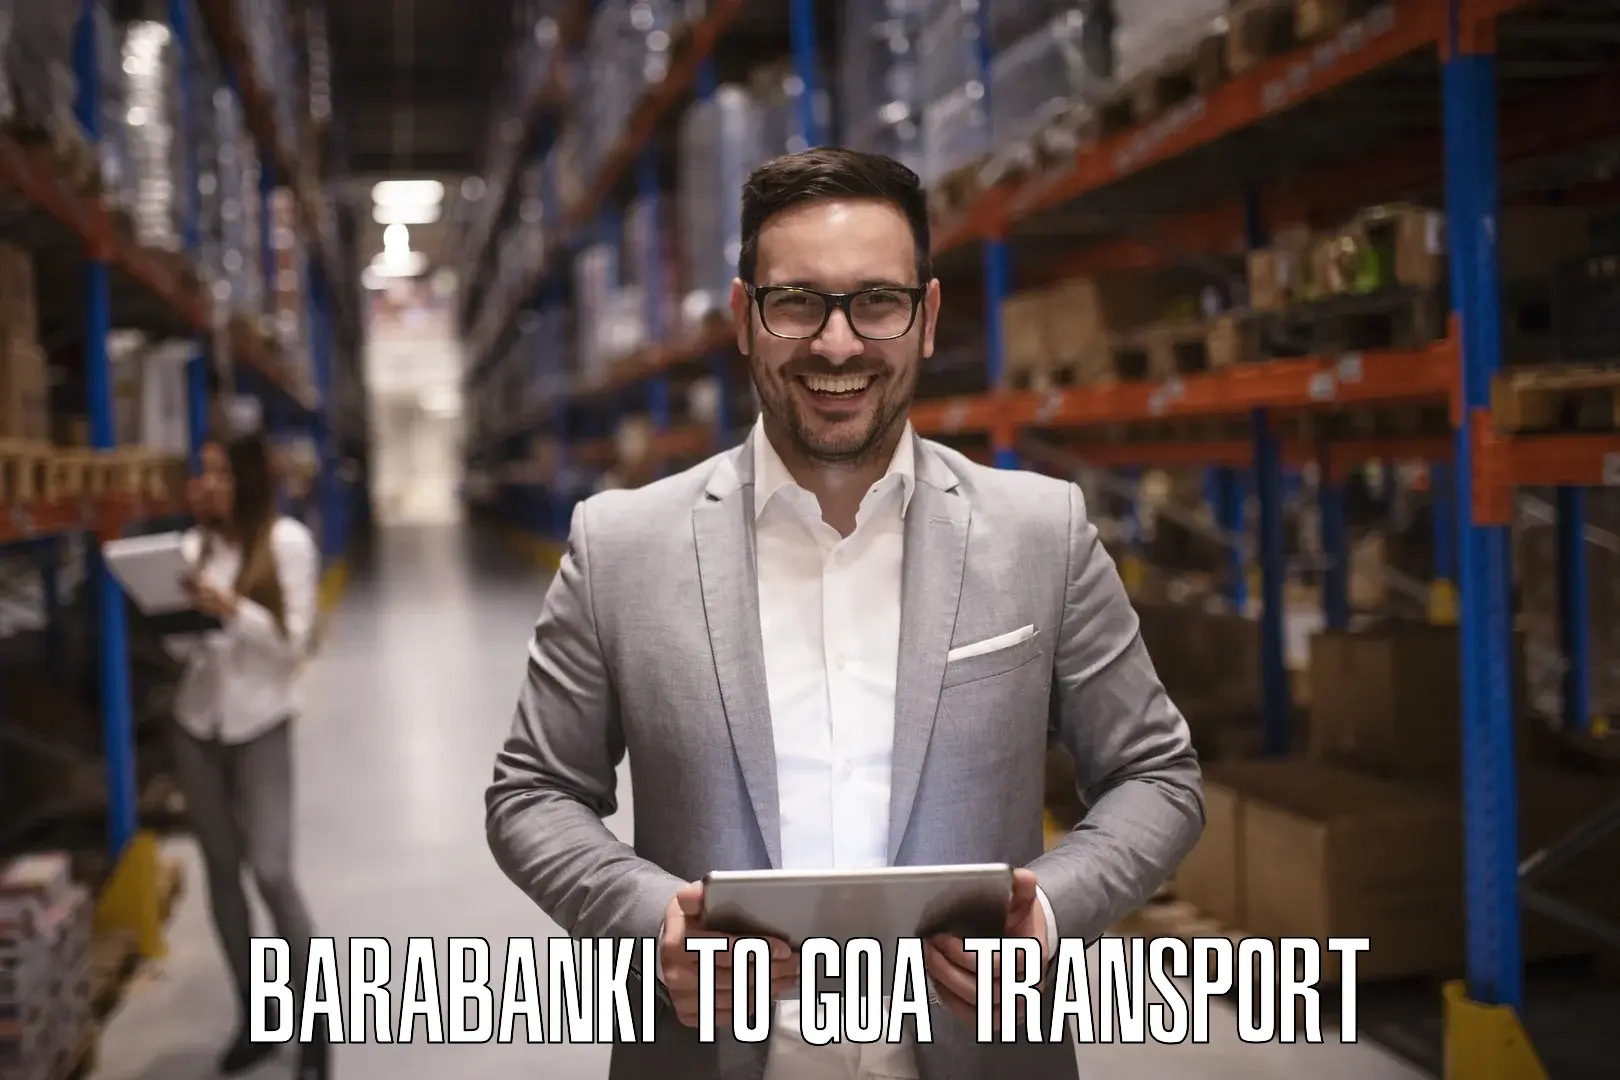 Online transport service Barabanki to Goa